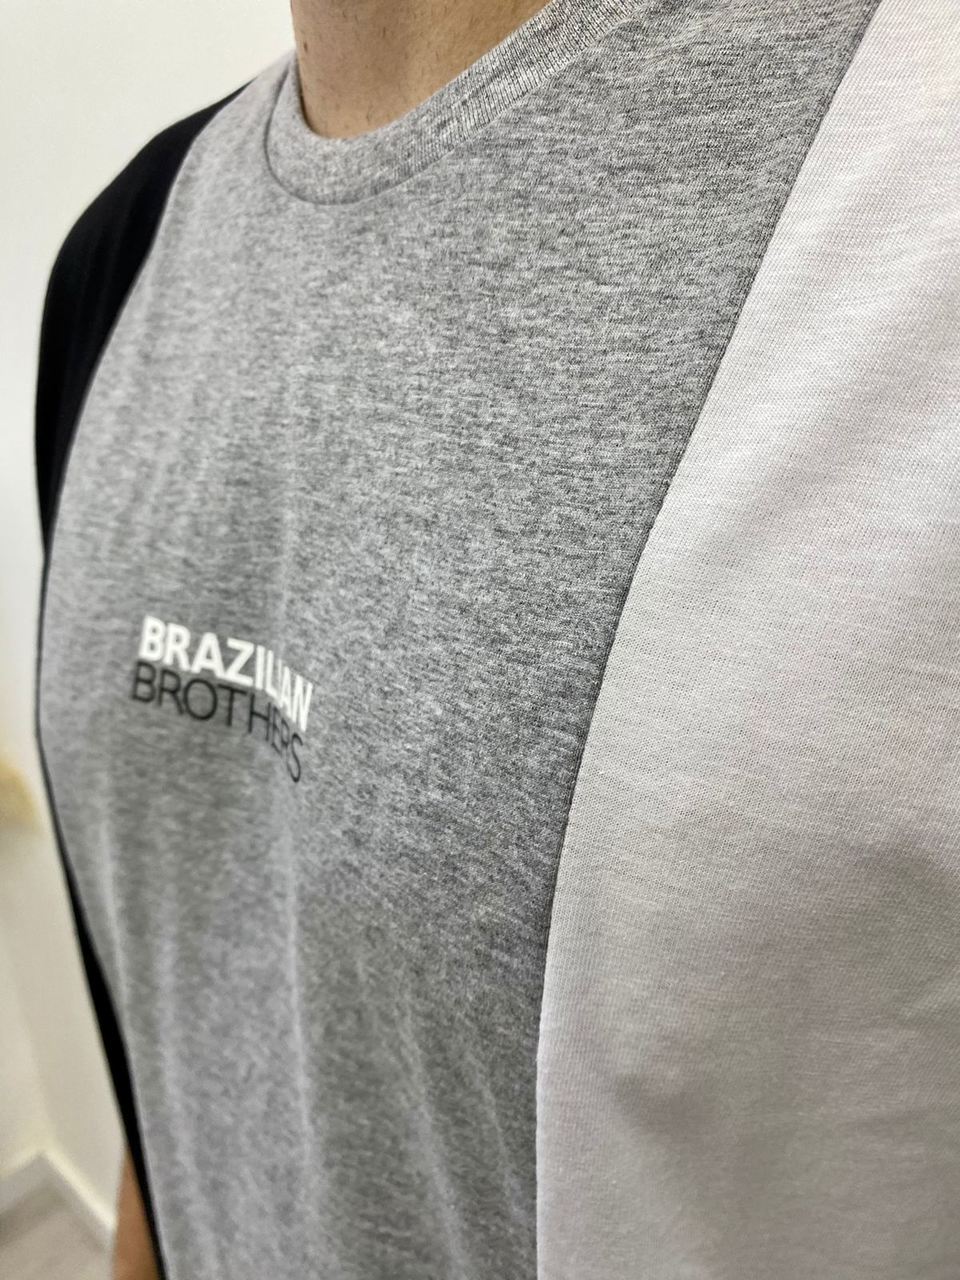 Camisa Recorte Brazilian Brothers